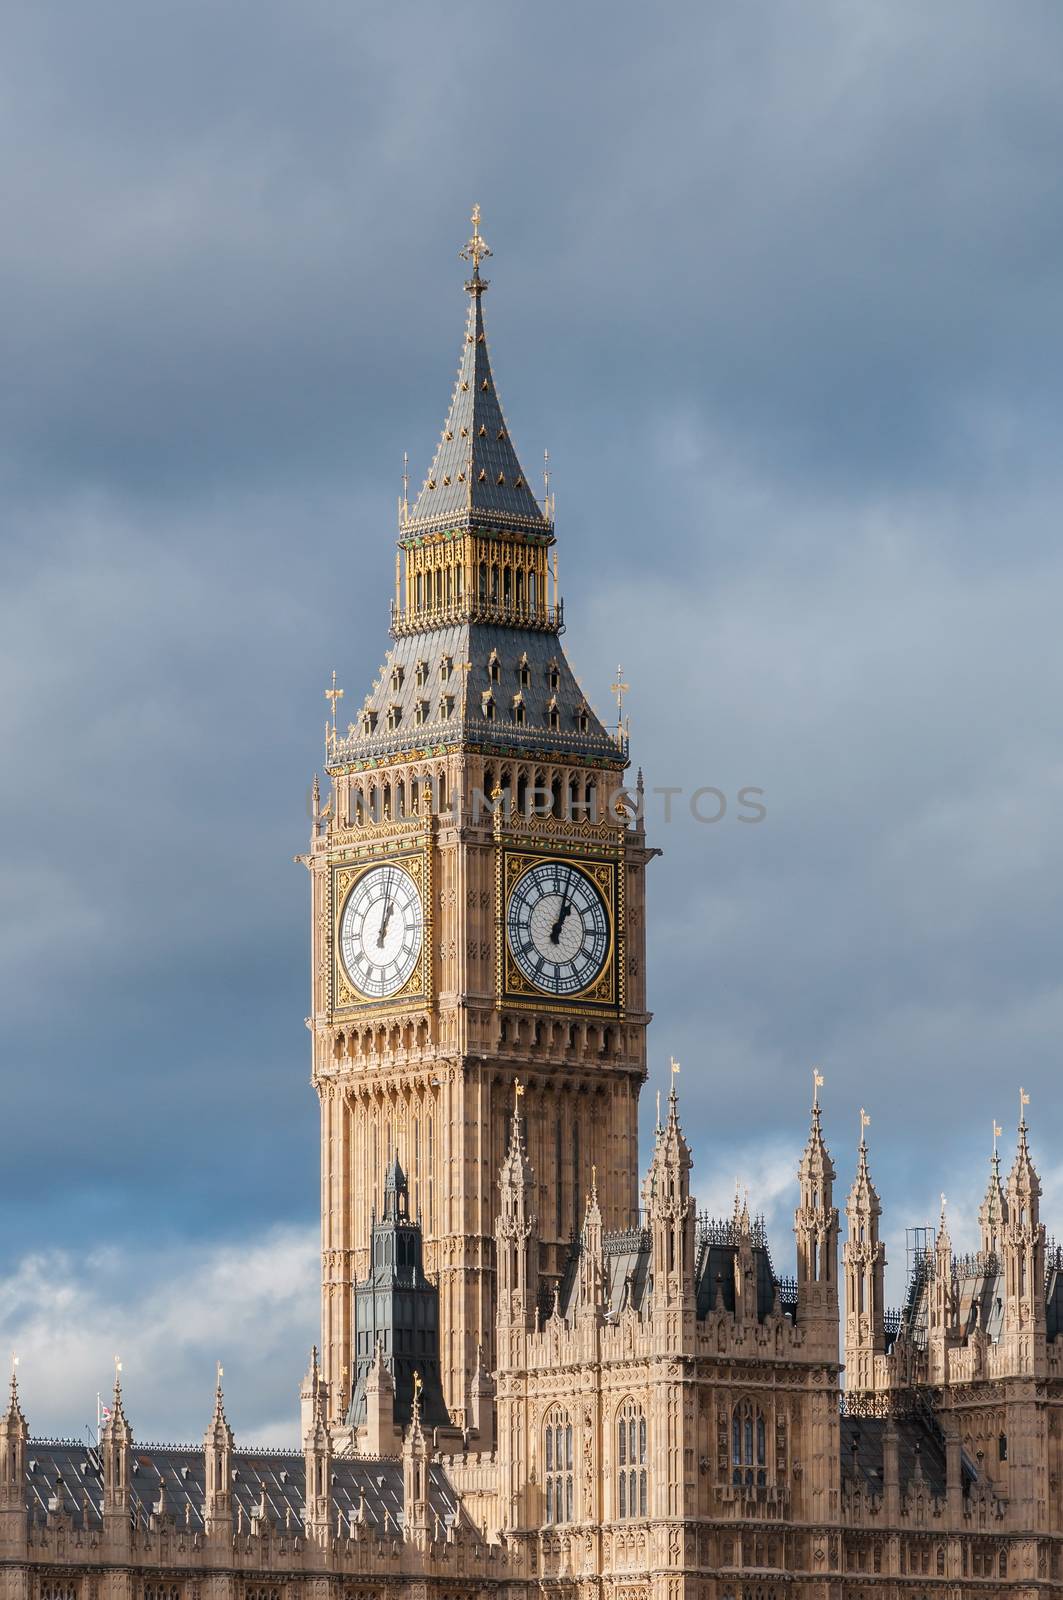 Big Ben Clock Tower in London against cloudy sky